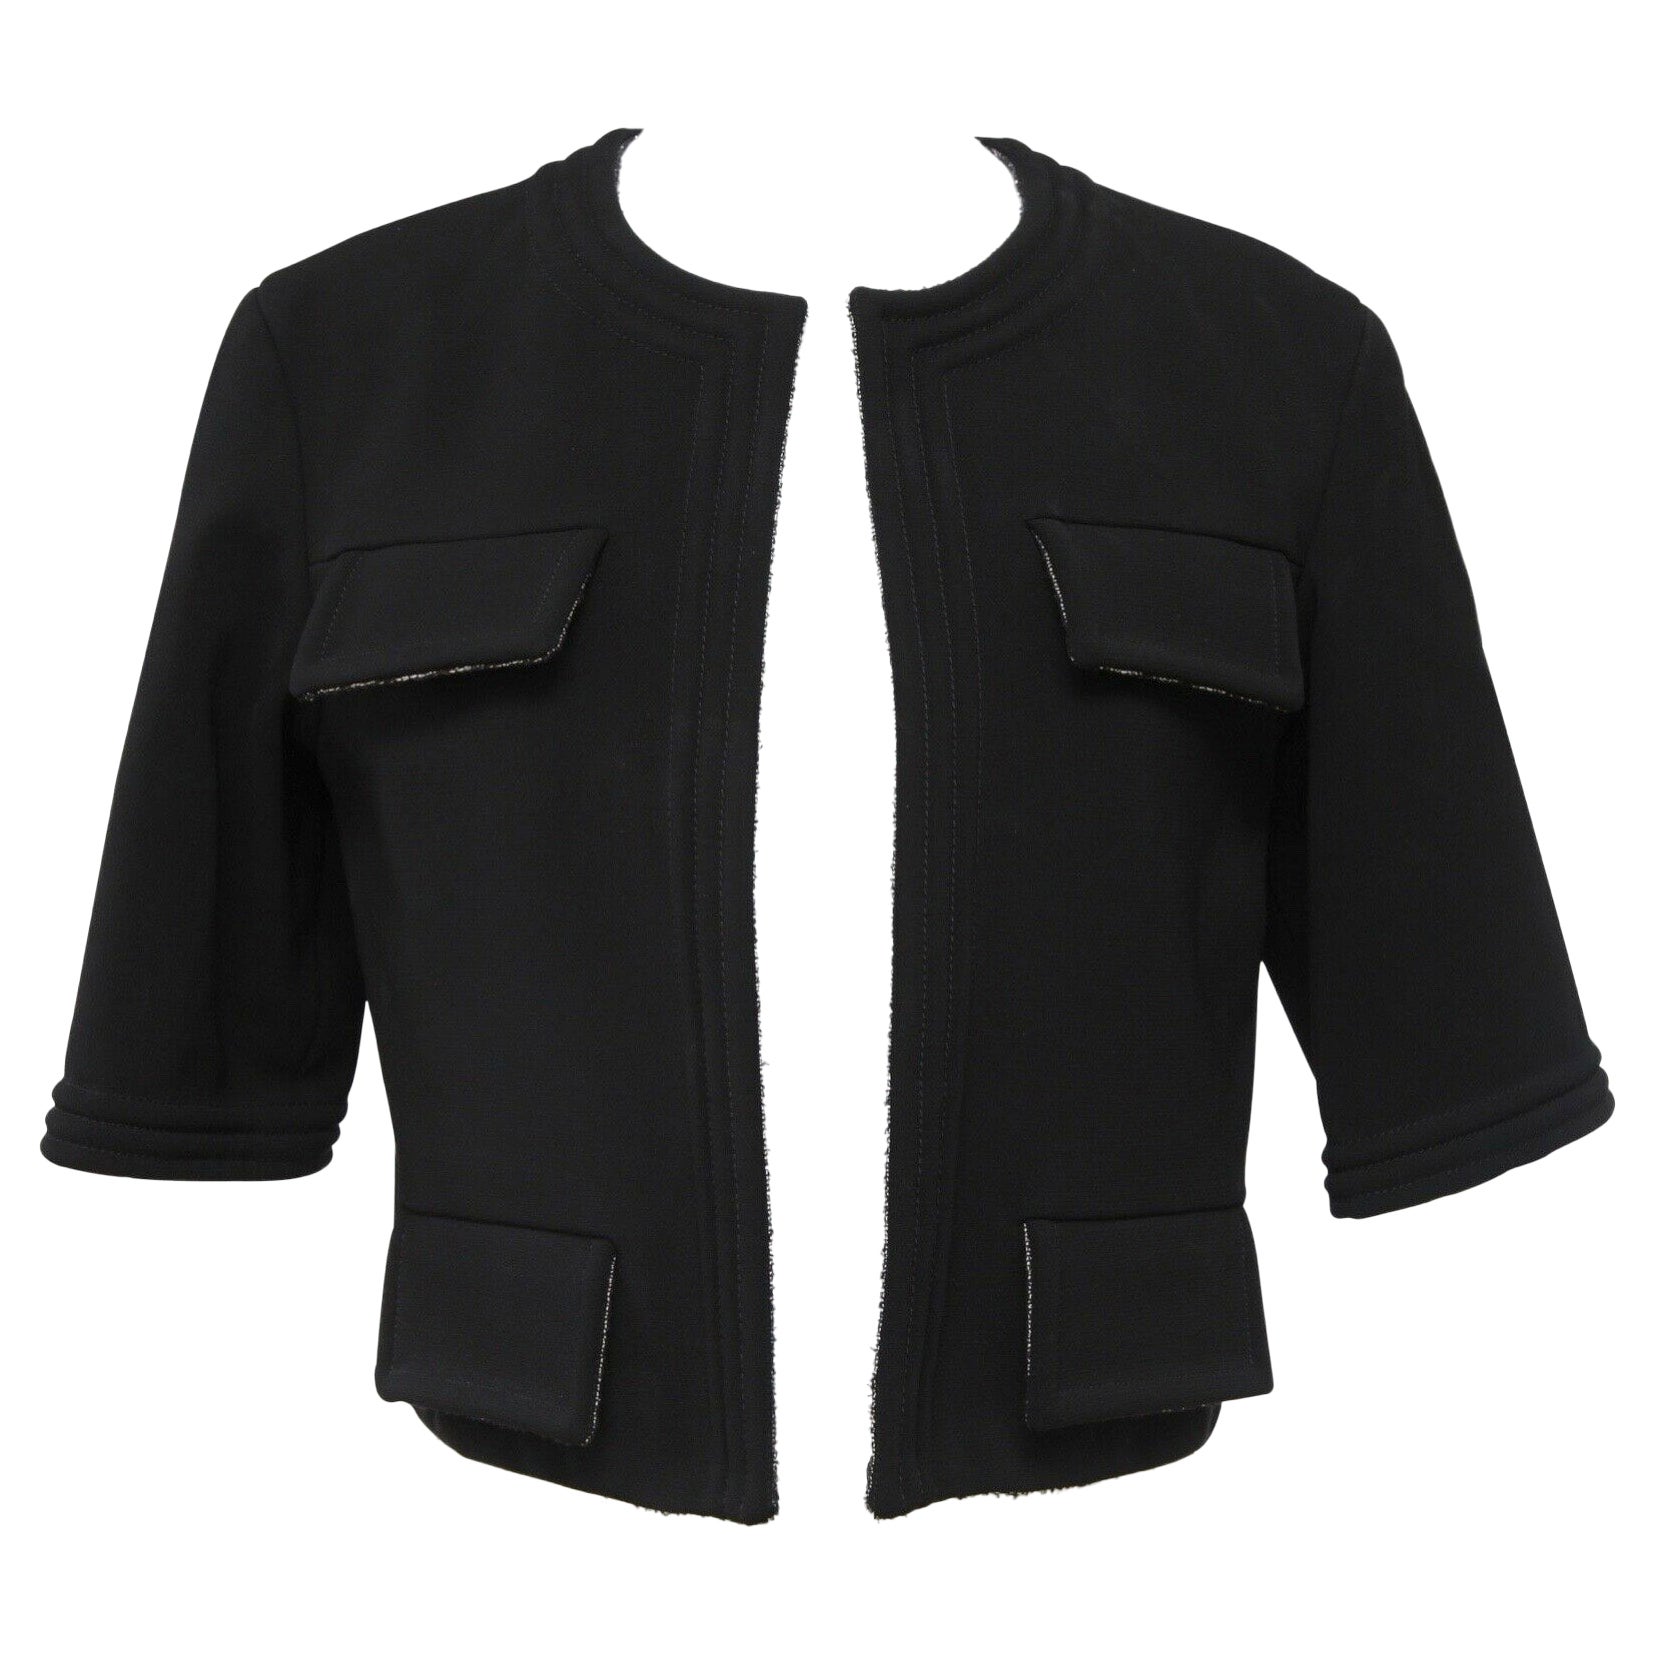 CHANEL Black Jacket Blazer Cropped Collarless Metallic Open Front 38 Fall 2012